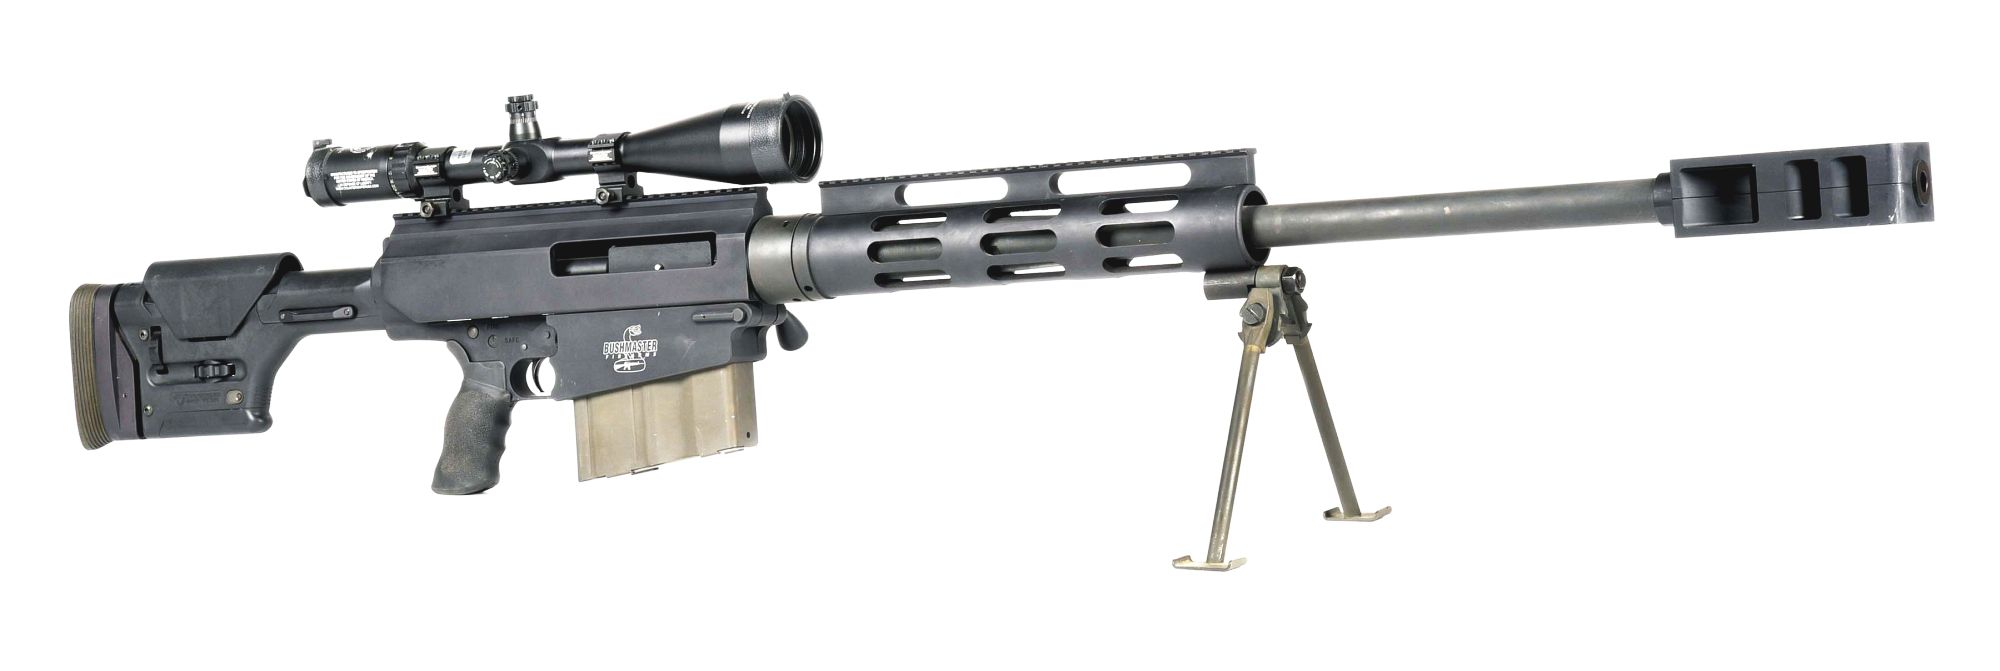 50 Caliber Anti-Armor Sniper Rifles - Gun Industry Accountability